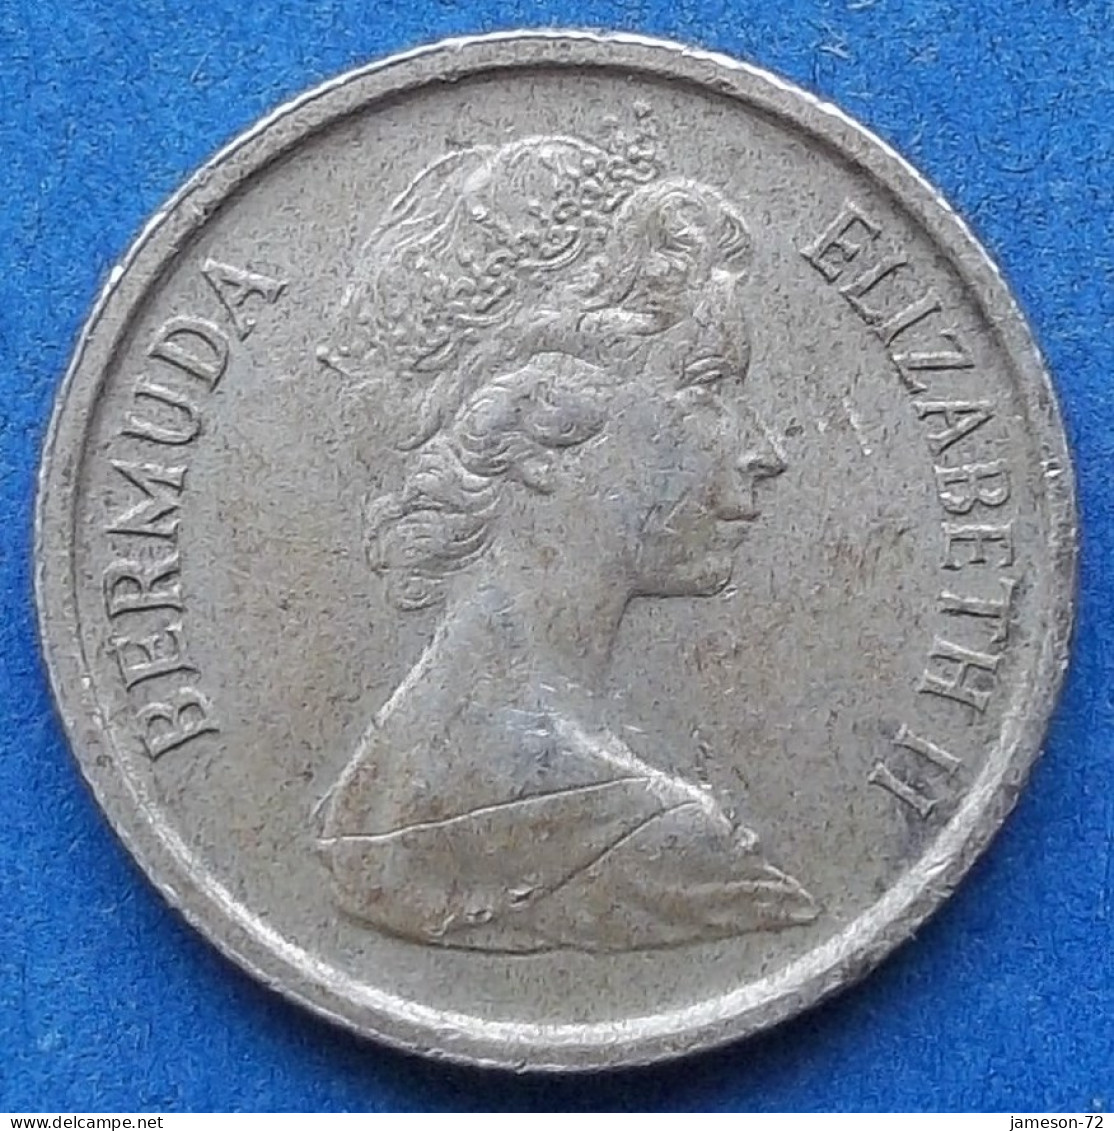 BERMUDA - 10 Cents 1980 "Bermuda Lily" KM# 17 Elizabeth II Decimal Coinage (1970-2022) - Edelweiss Coins - Bermudes